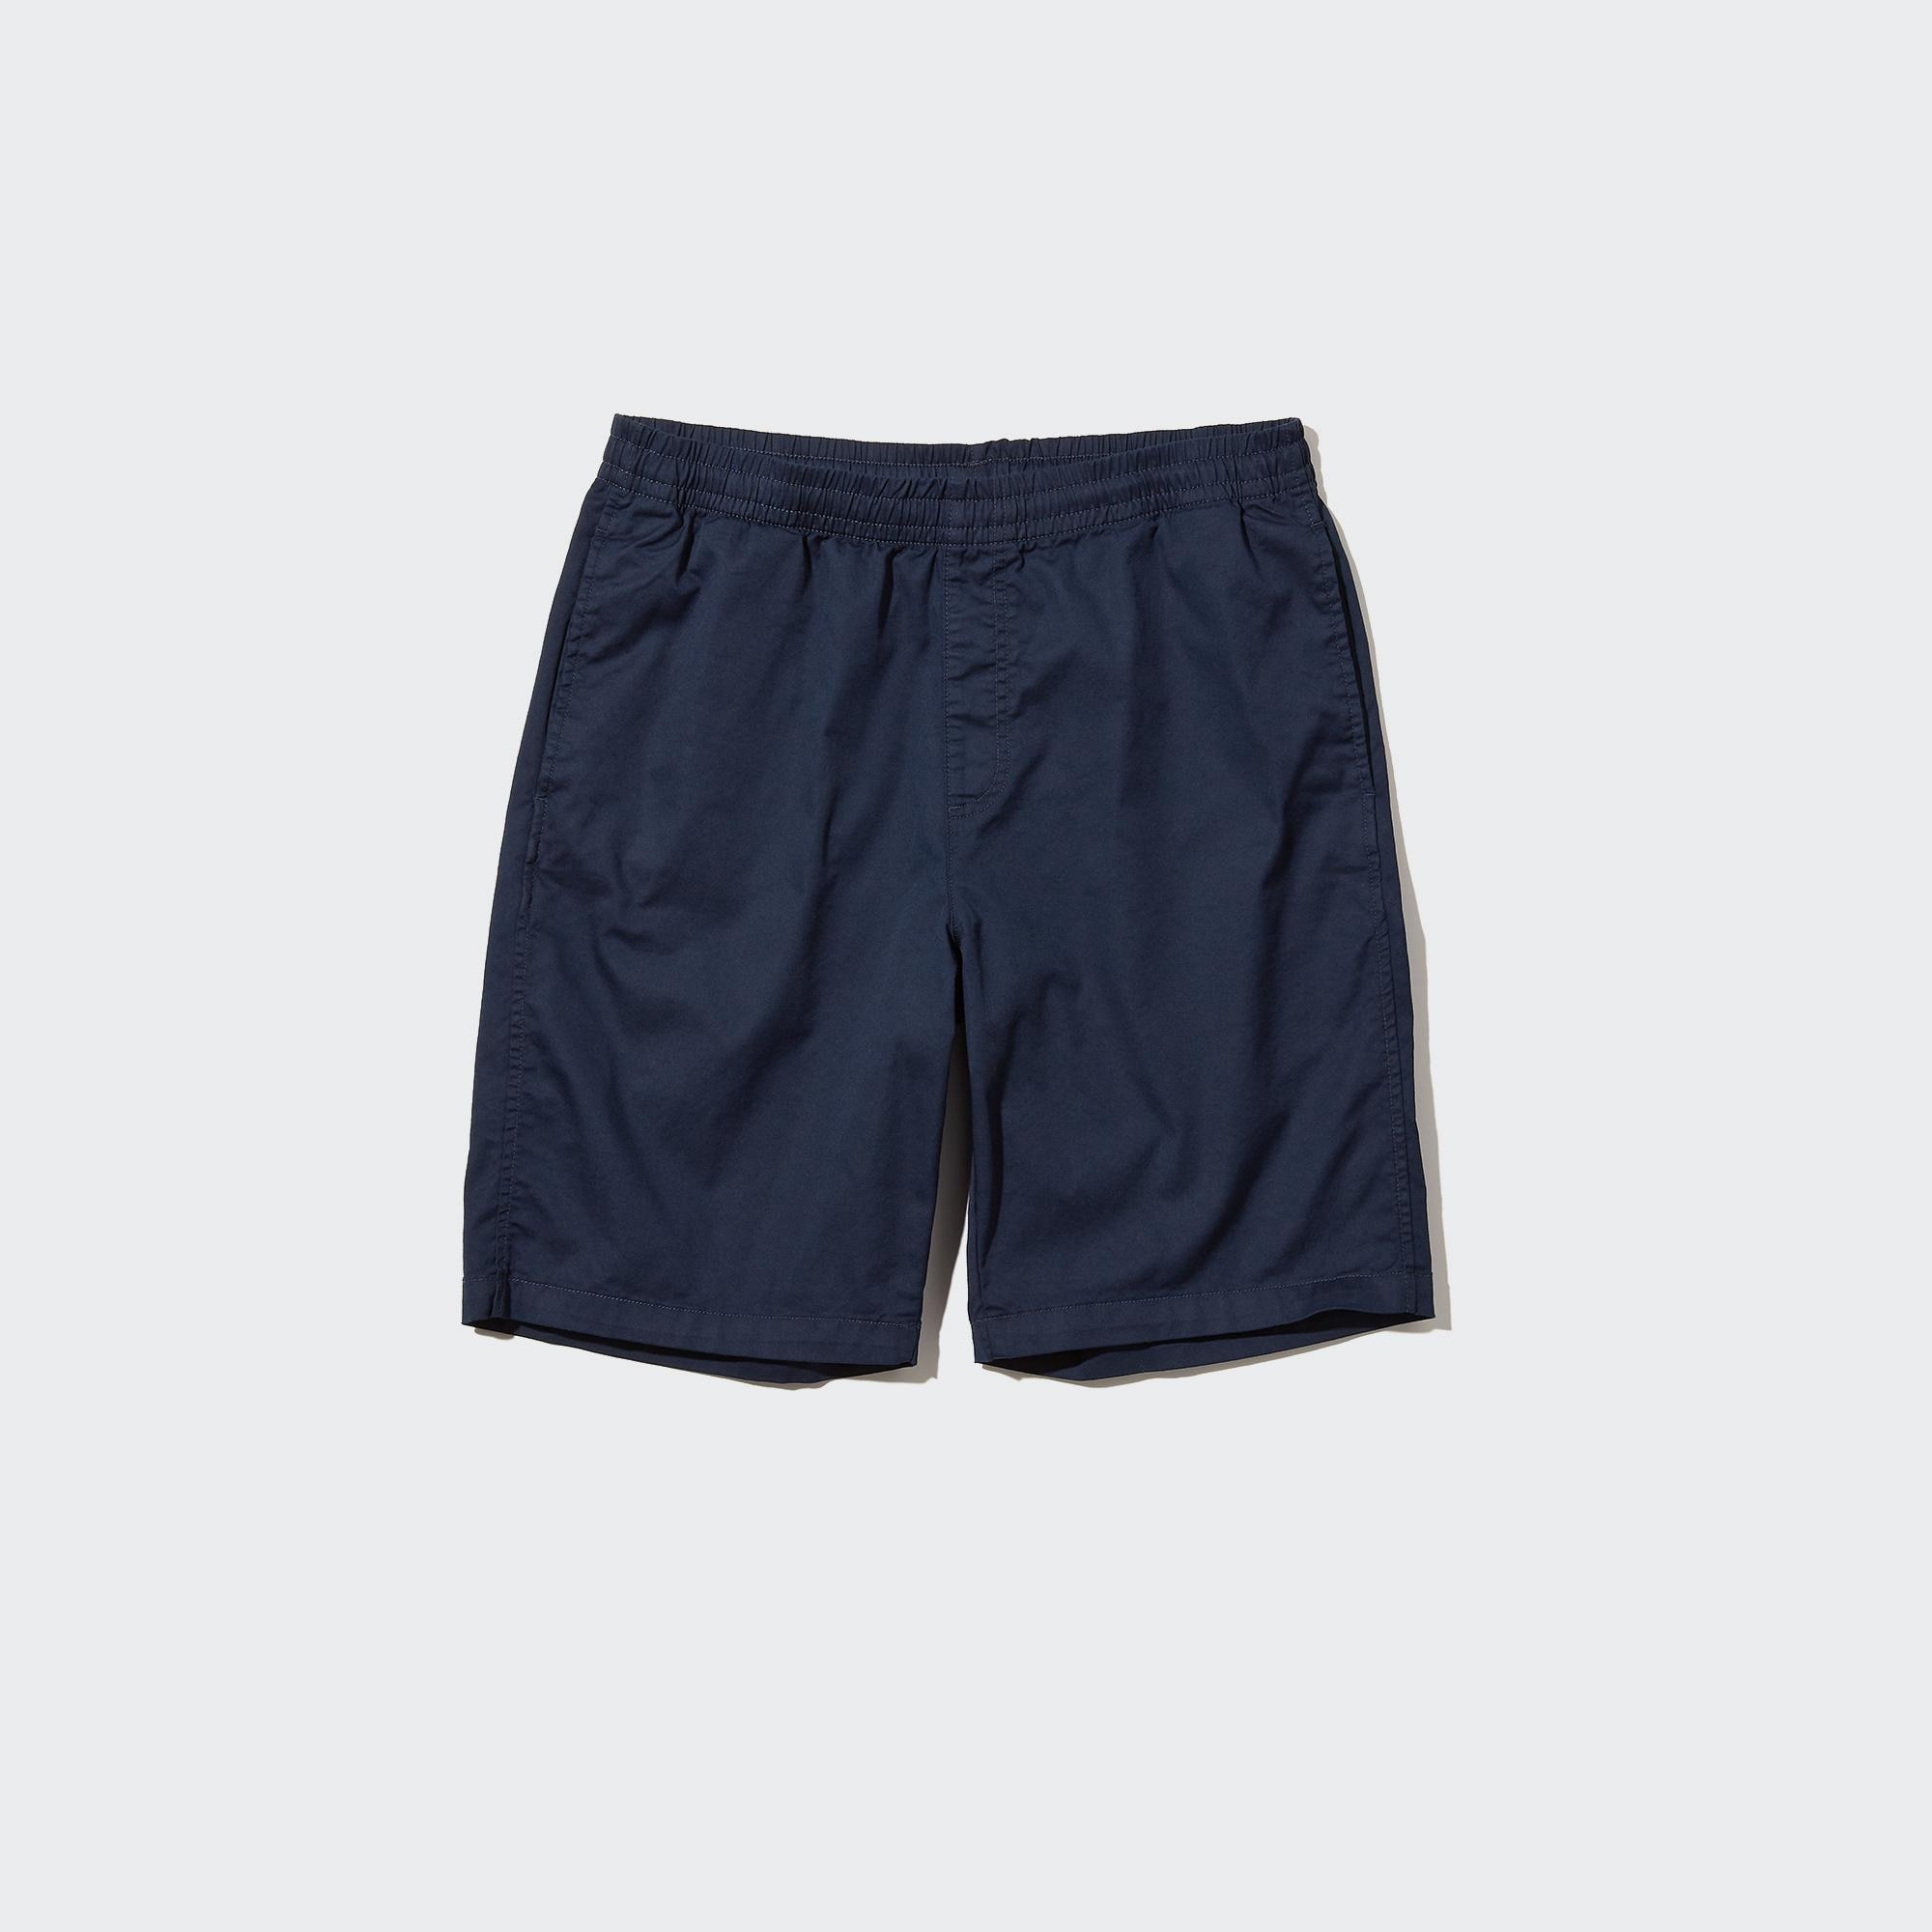 Men's Airism Cotton Easy Shorts (8), Navy, 3XL